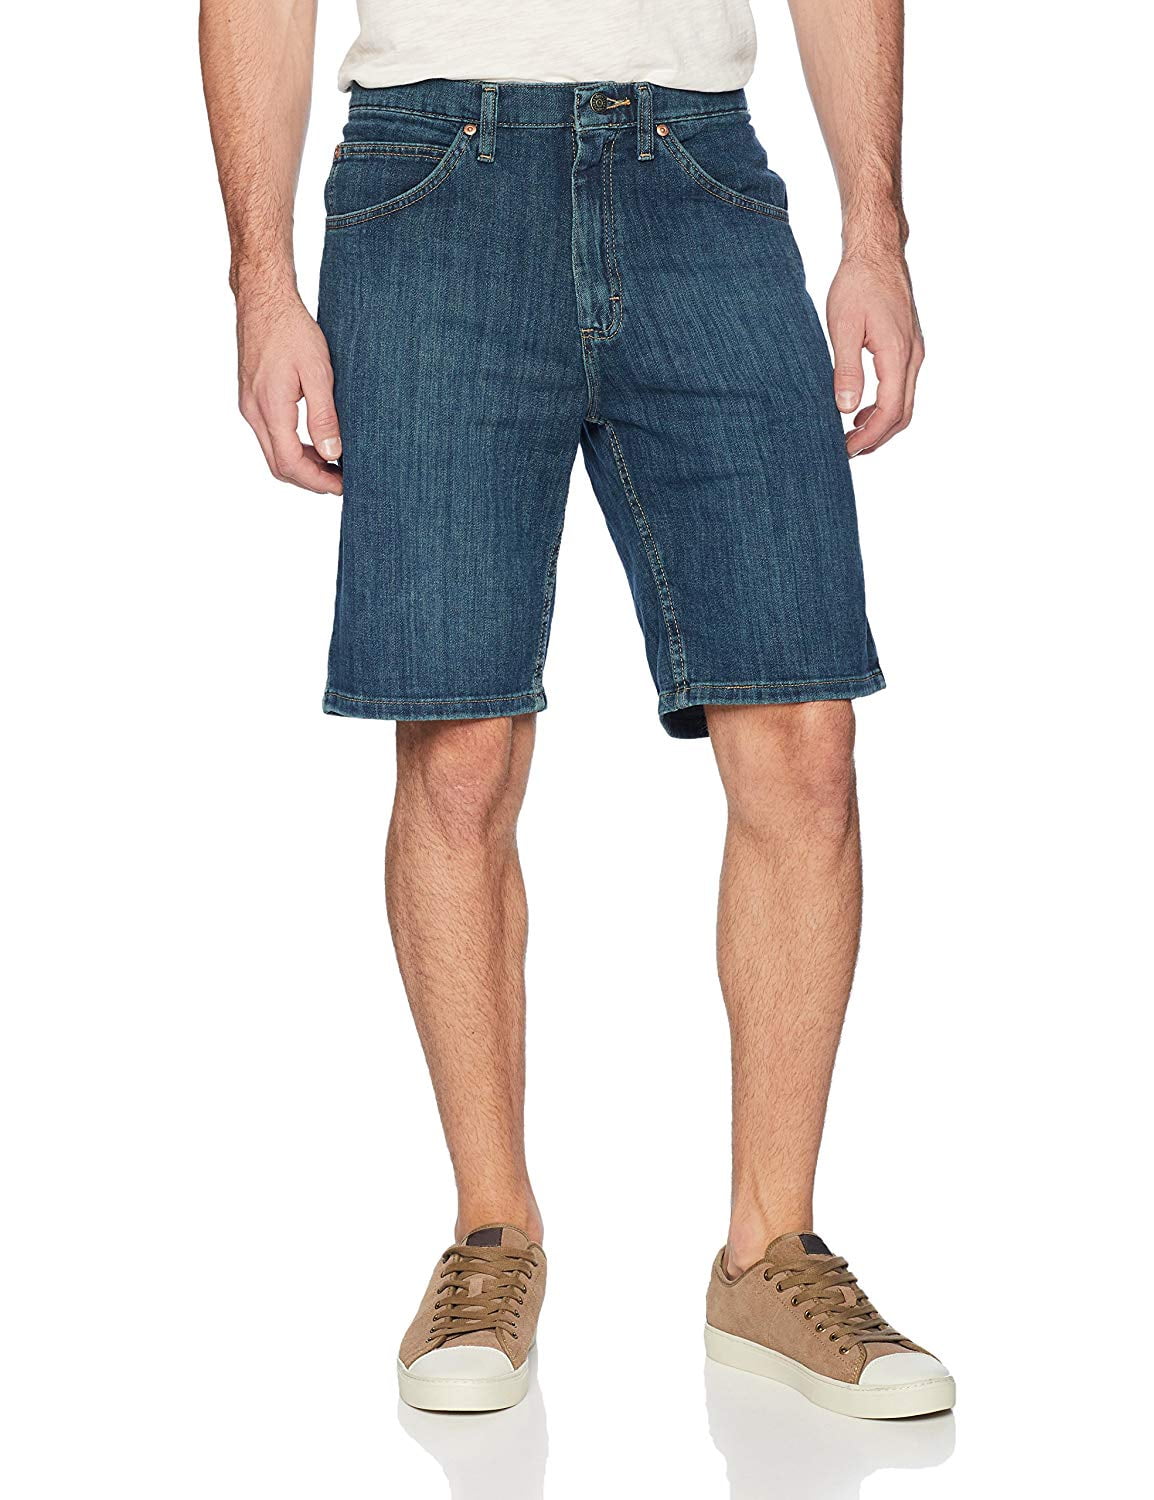 LEE Men's Regular-Fit Denim Short, Titanium, 33 | Walmart Canada